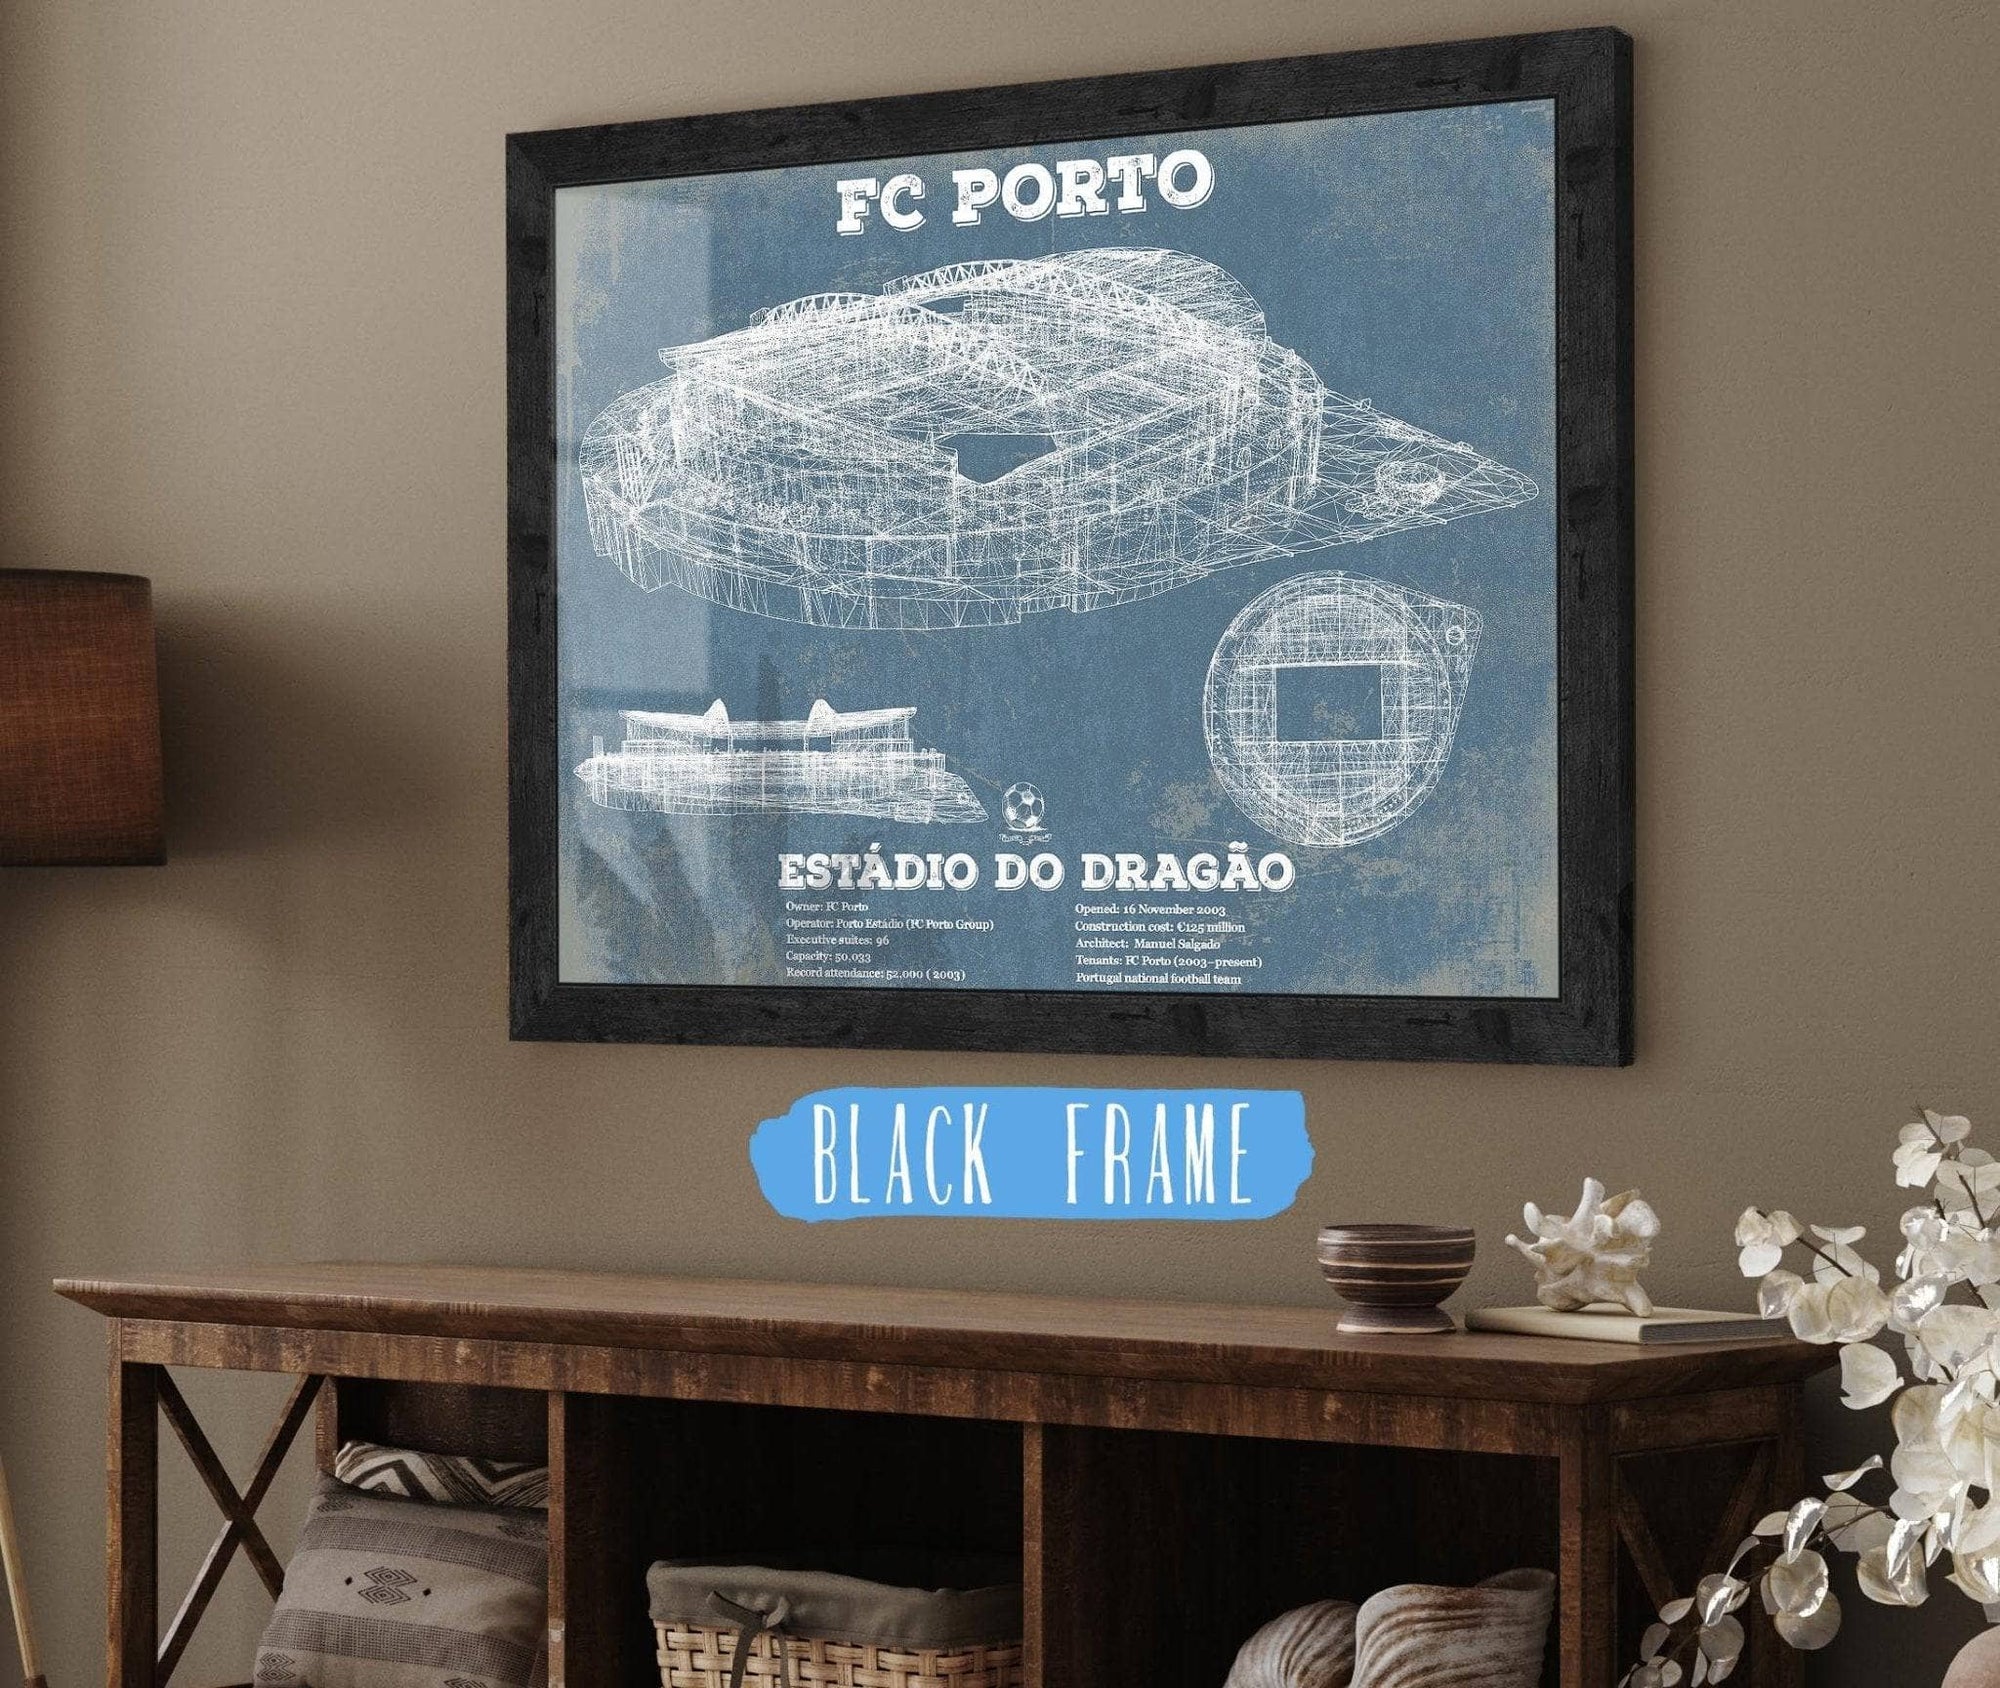 Cutler West Soccer Collection 14" x 11" / Black Frame F.C. Porto Estadio Do Dragao Stadium Blueprint Vintage Soccer Print 845000147_62070